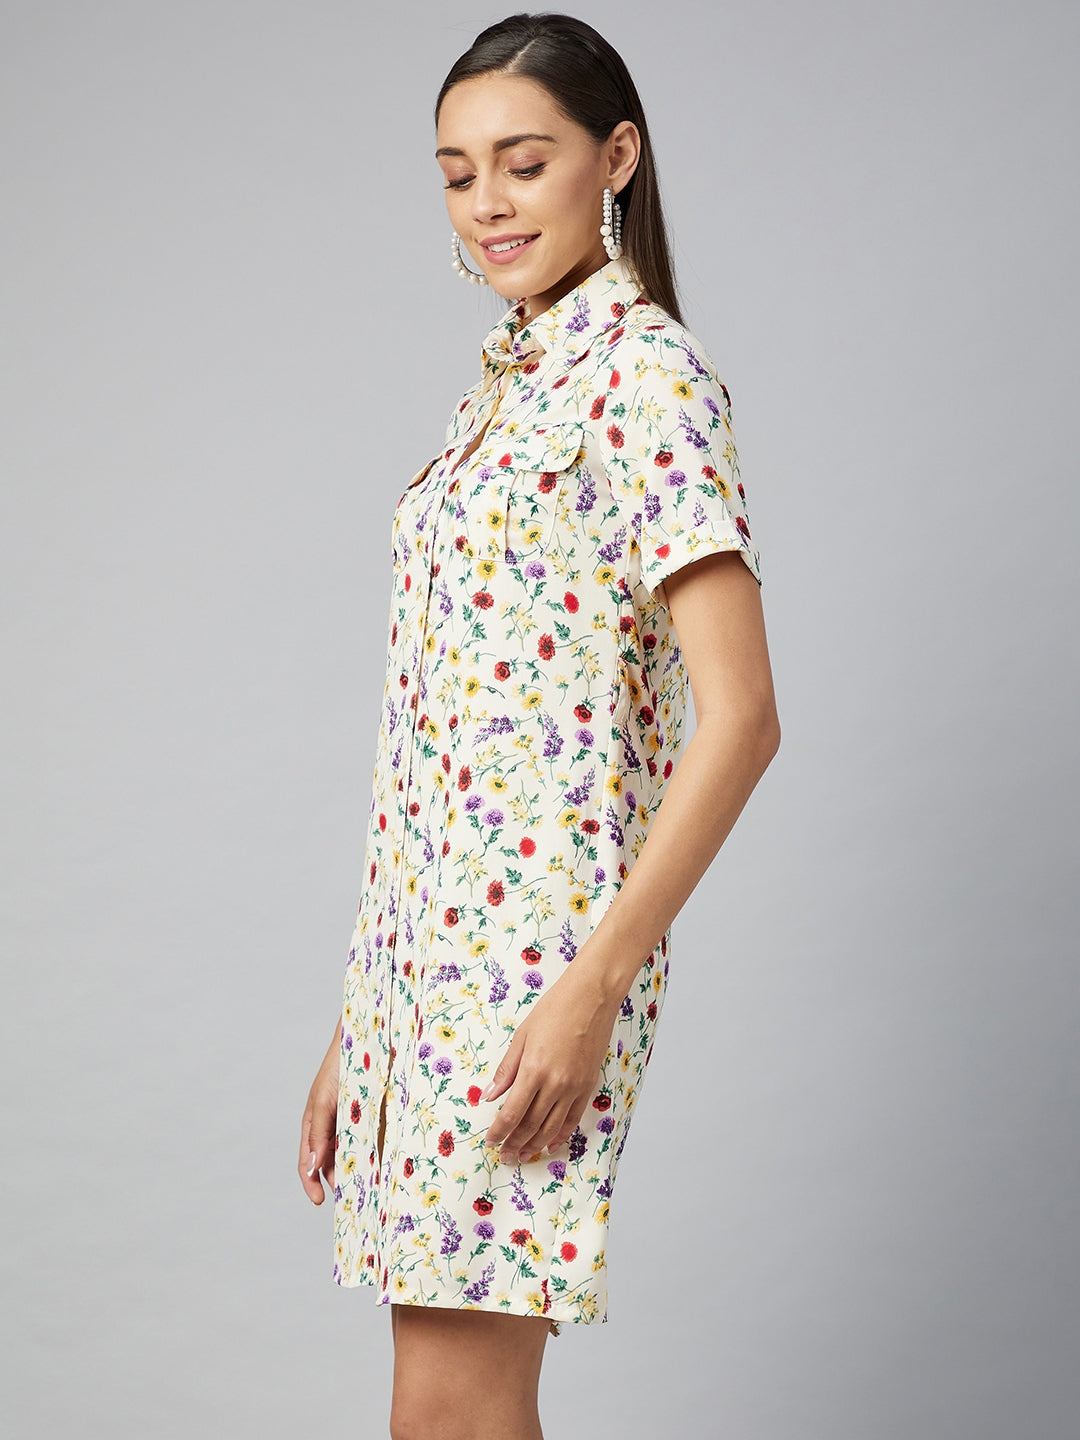 Women's Multi Floral Polyester Shirt Dress